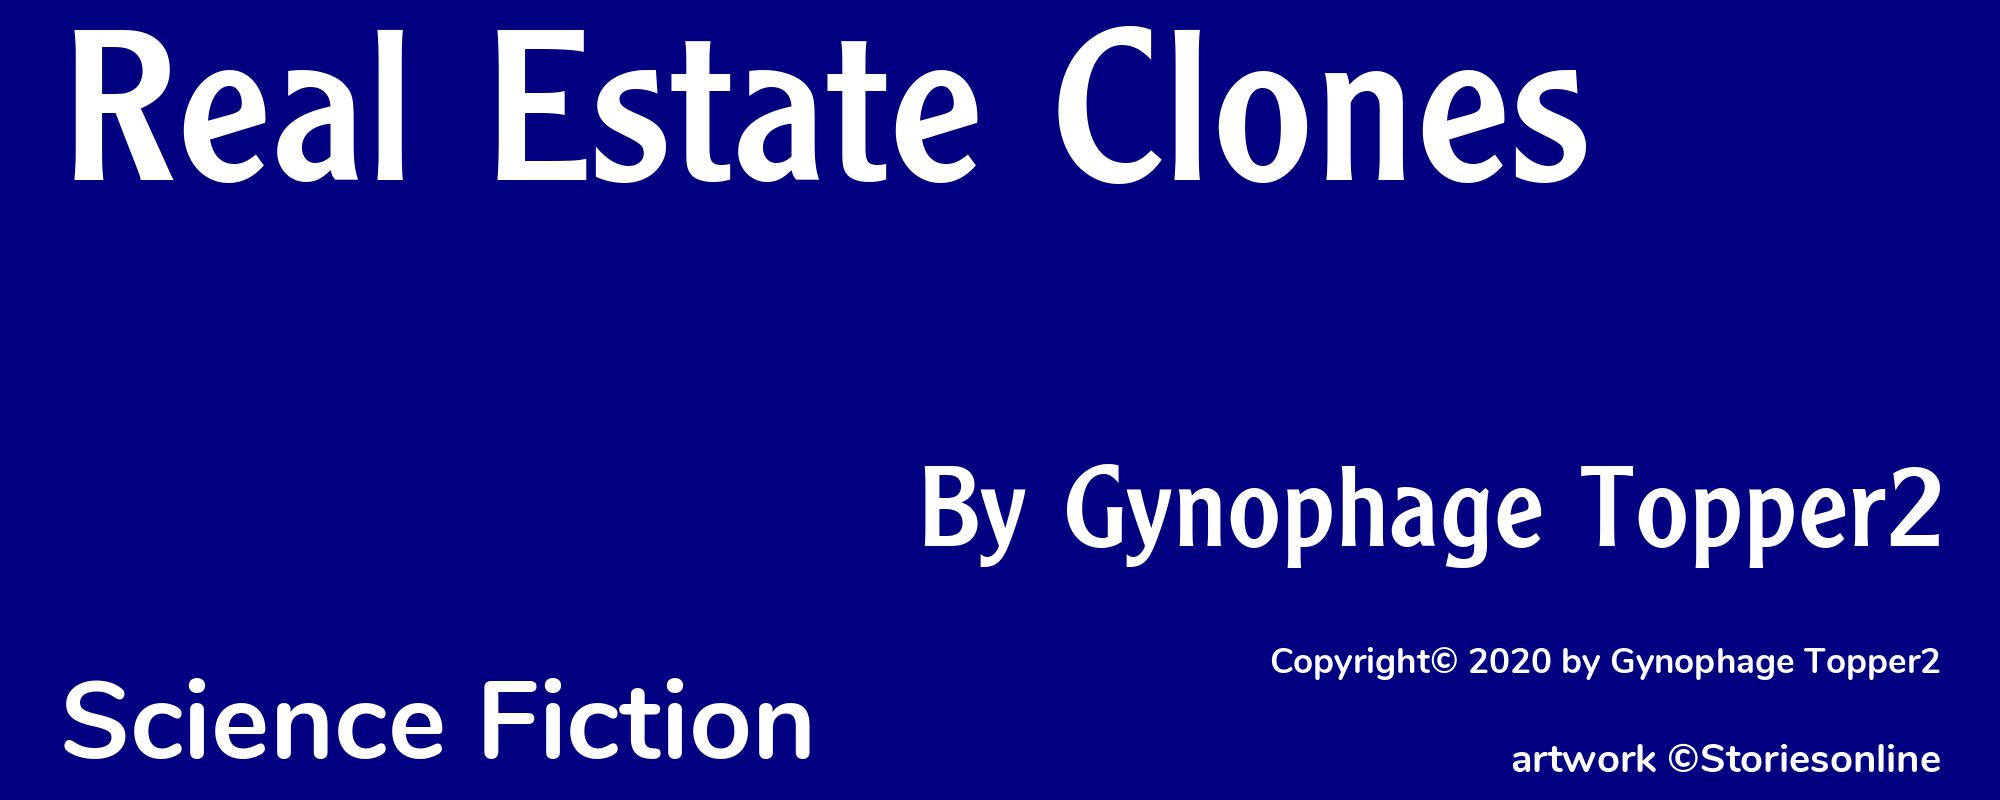 Real Estate Clones - Cover